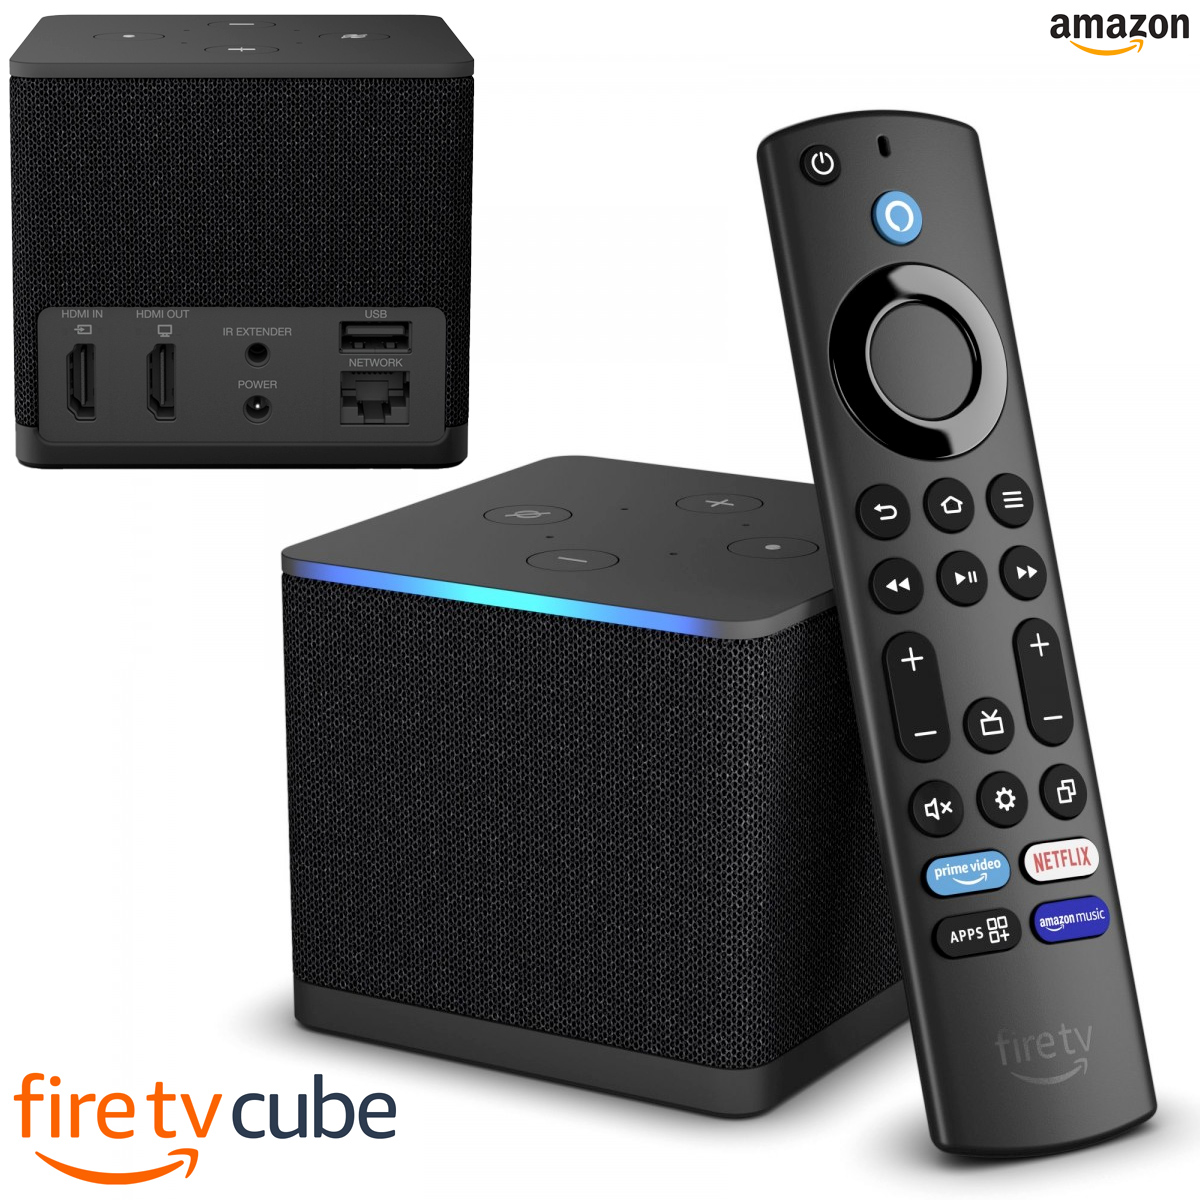 Novo Amazon Fire TV Cube